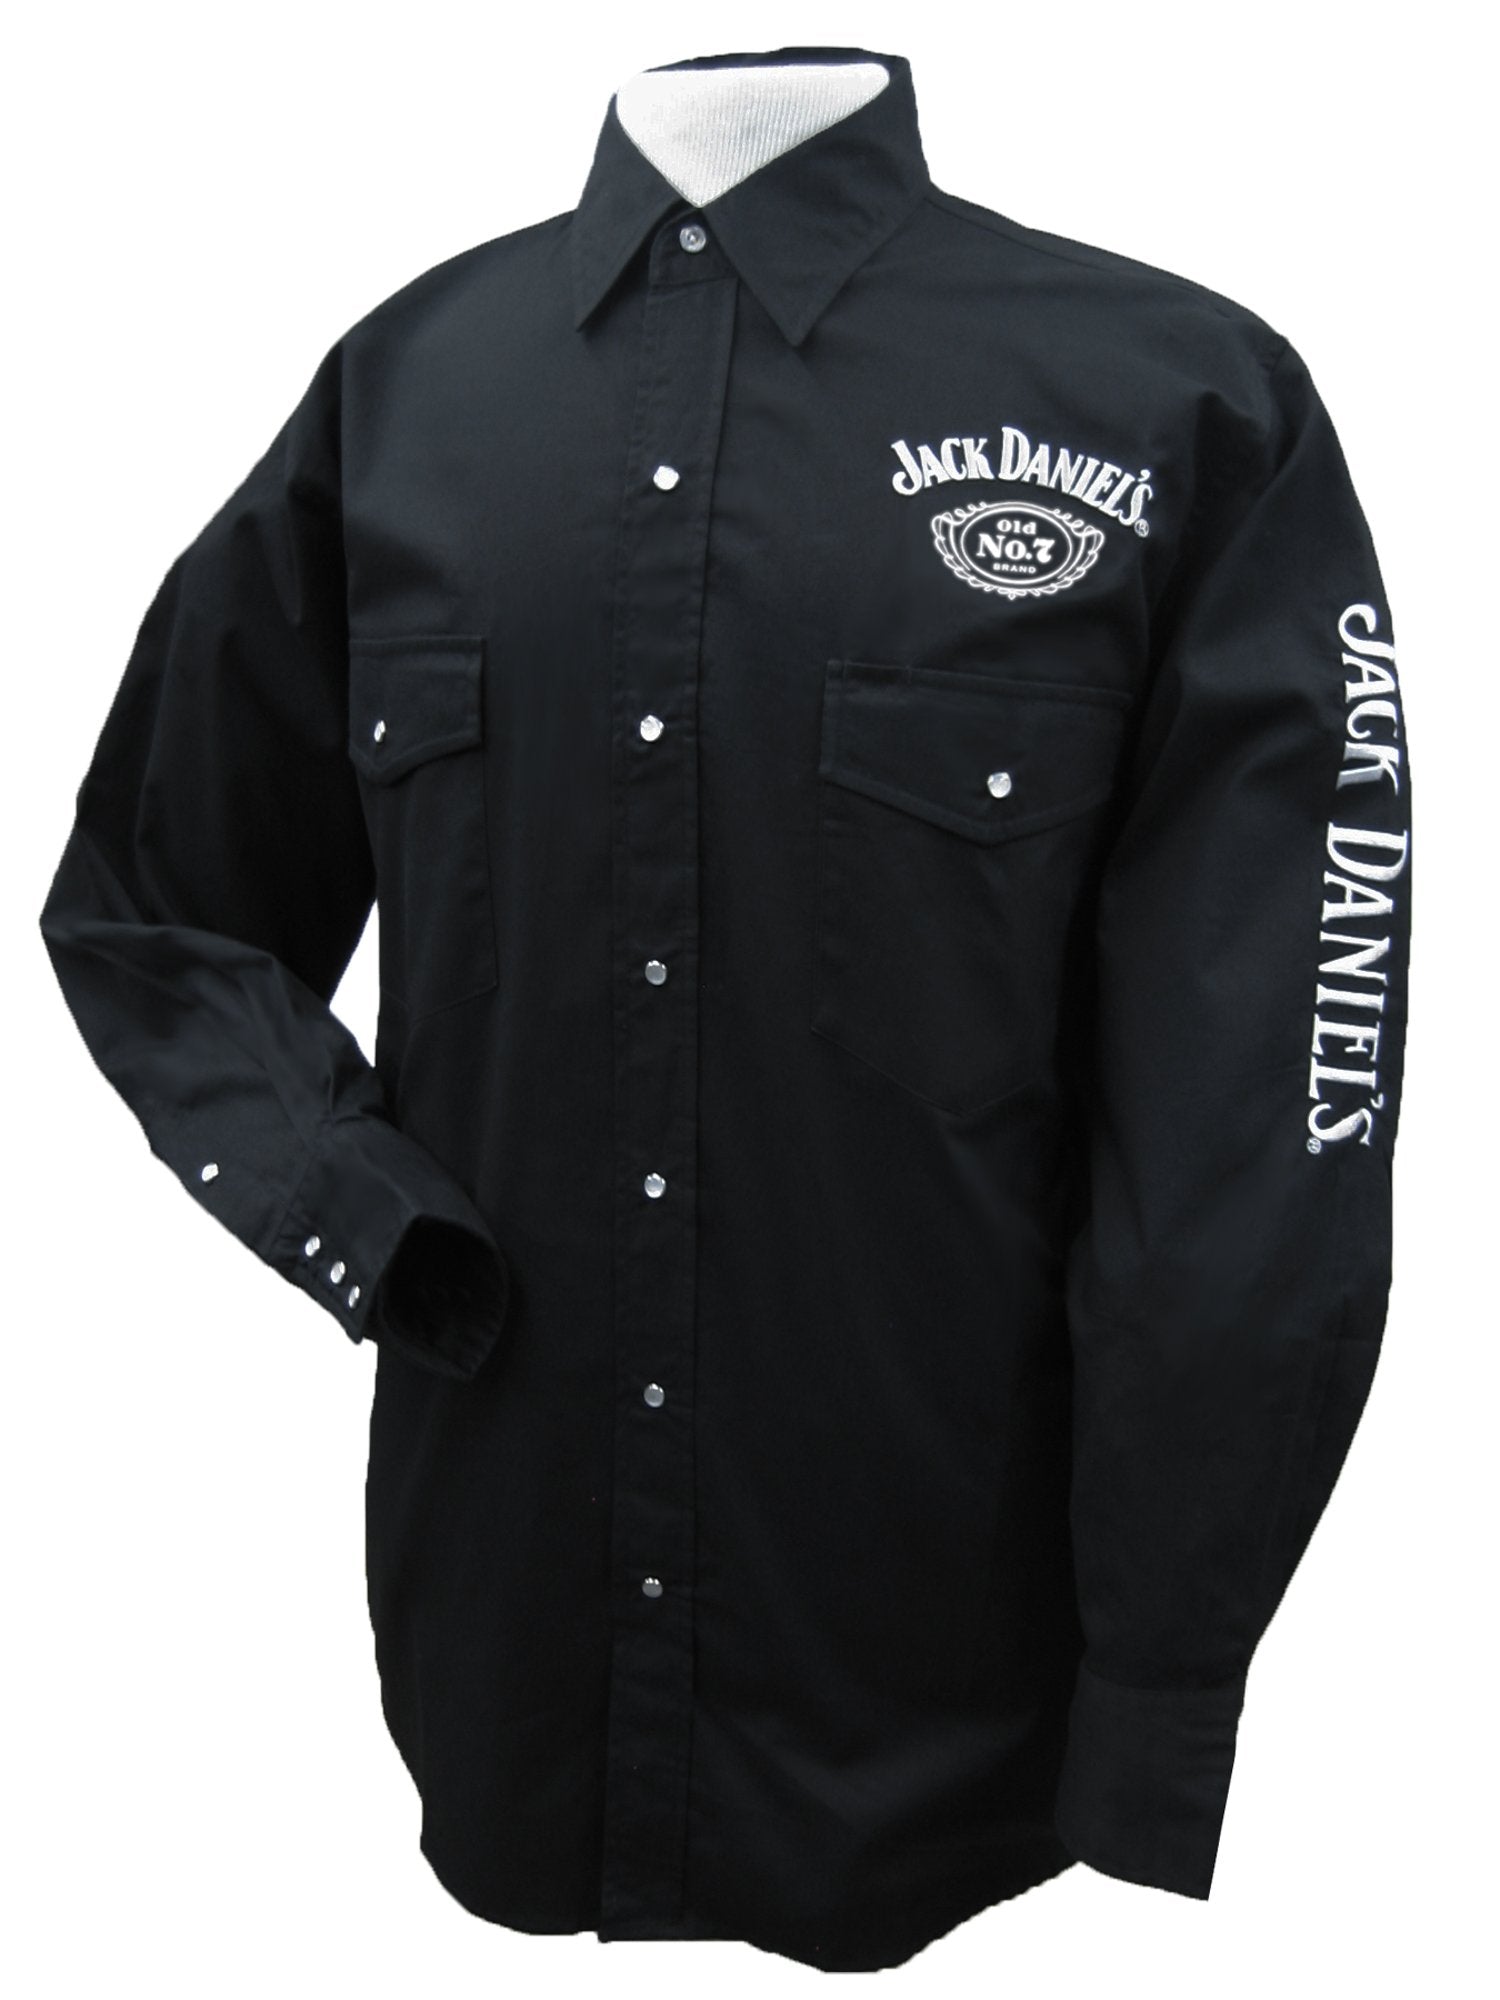 Ely & Walker Men's Jack Daniels Long Sleeve Western Shirt - Black